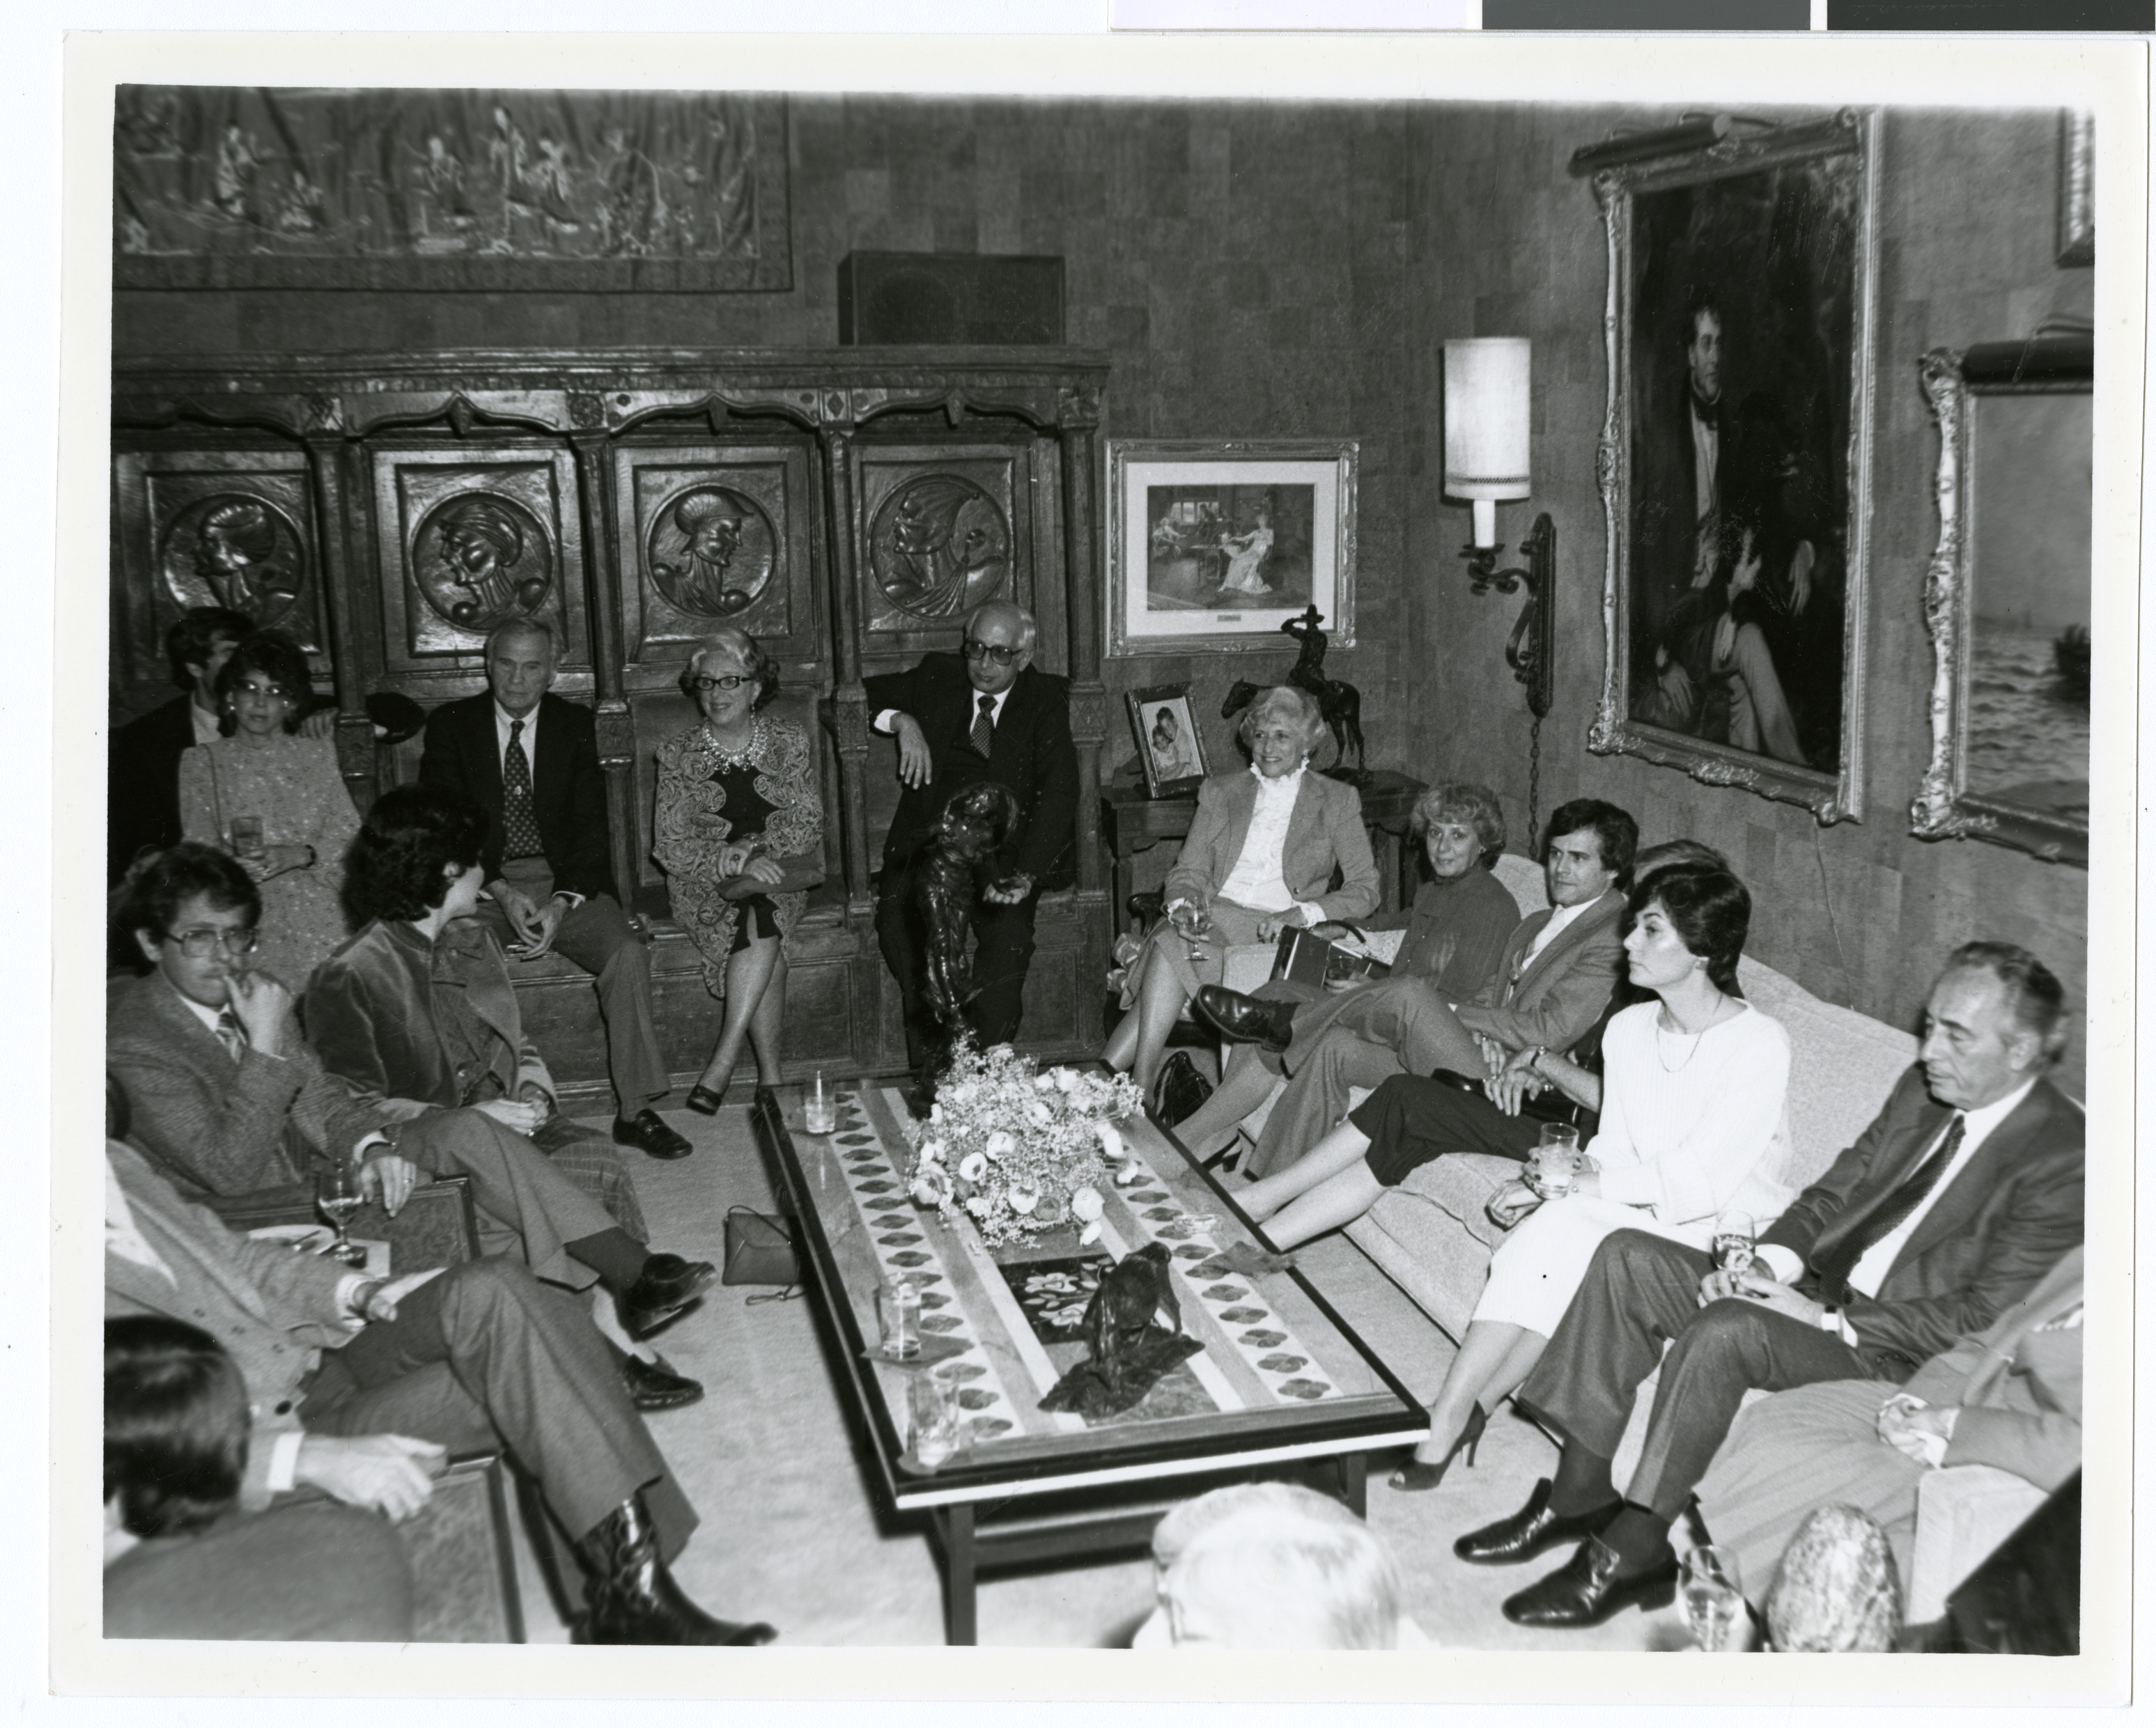 Photographs of Jewish Federation Leaders, image 01